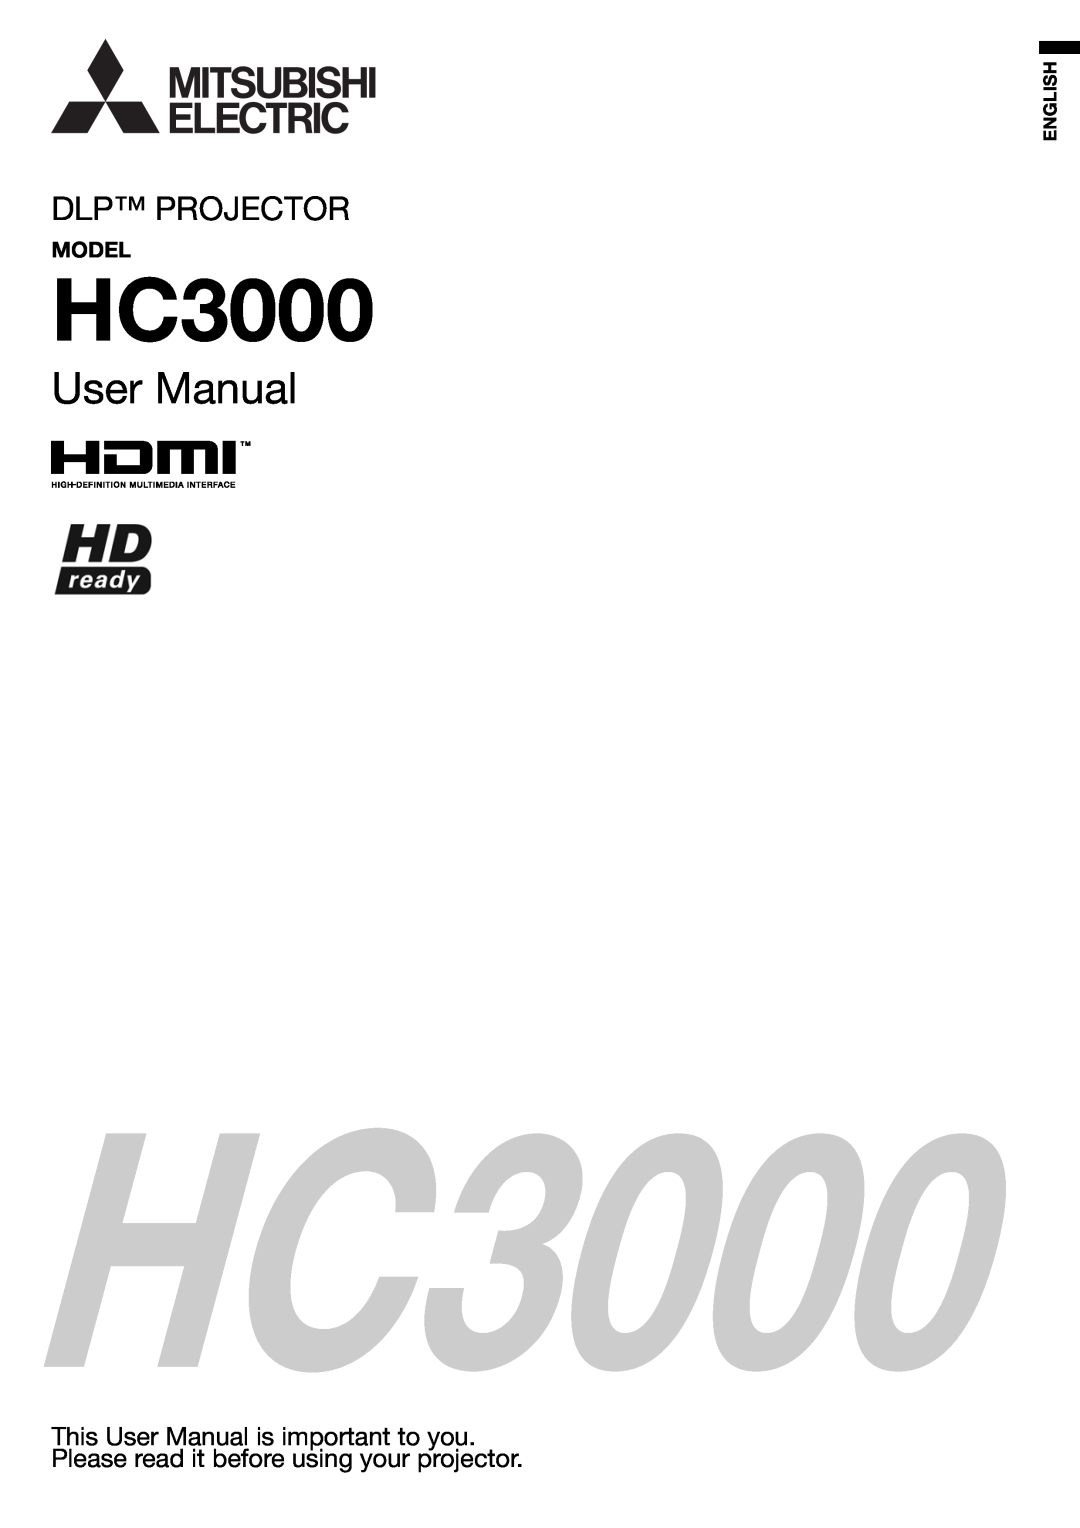 Mitsubishi Electronics HC3000 user manual Model, User Manual, Dlp Projector, English 